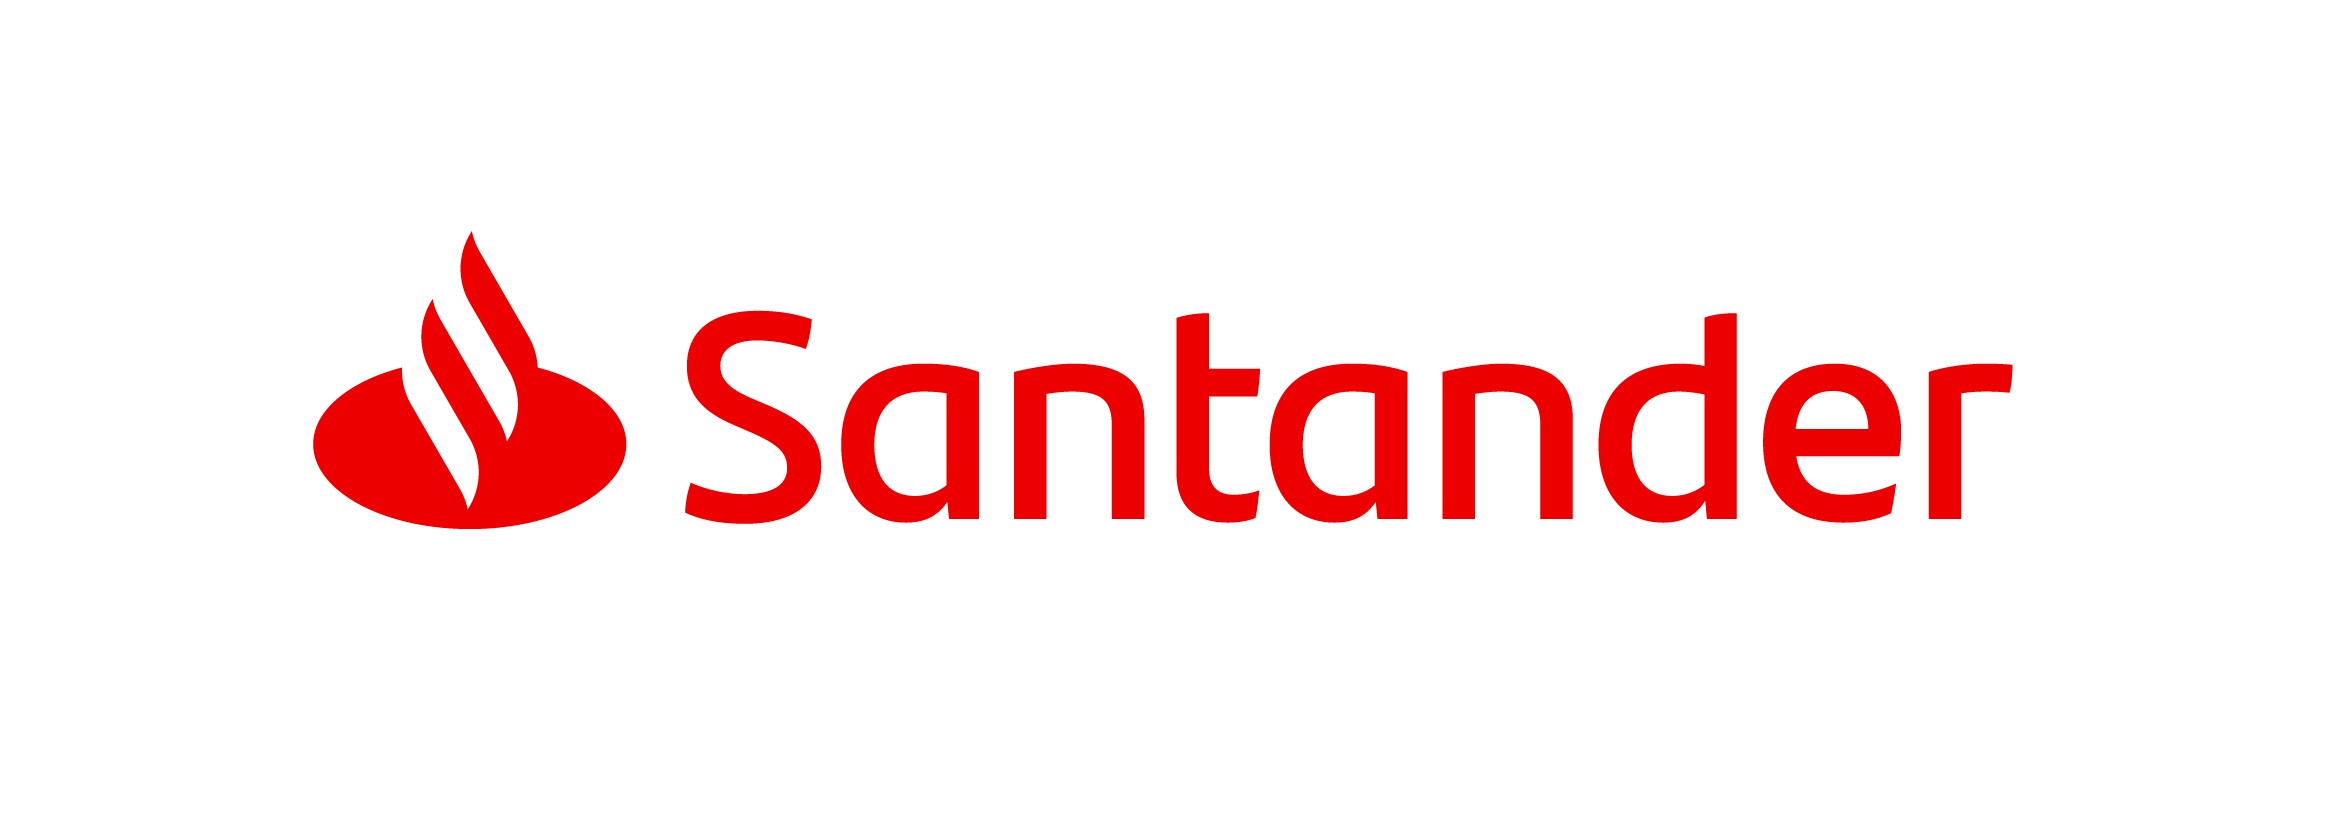 Santander1